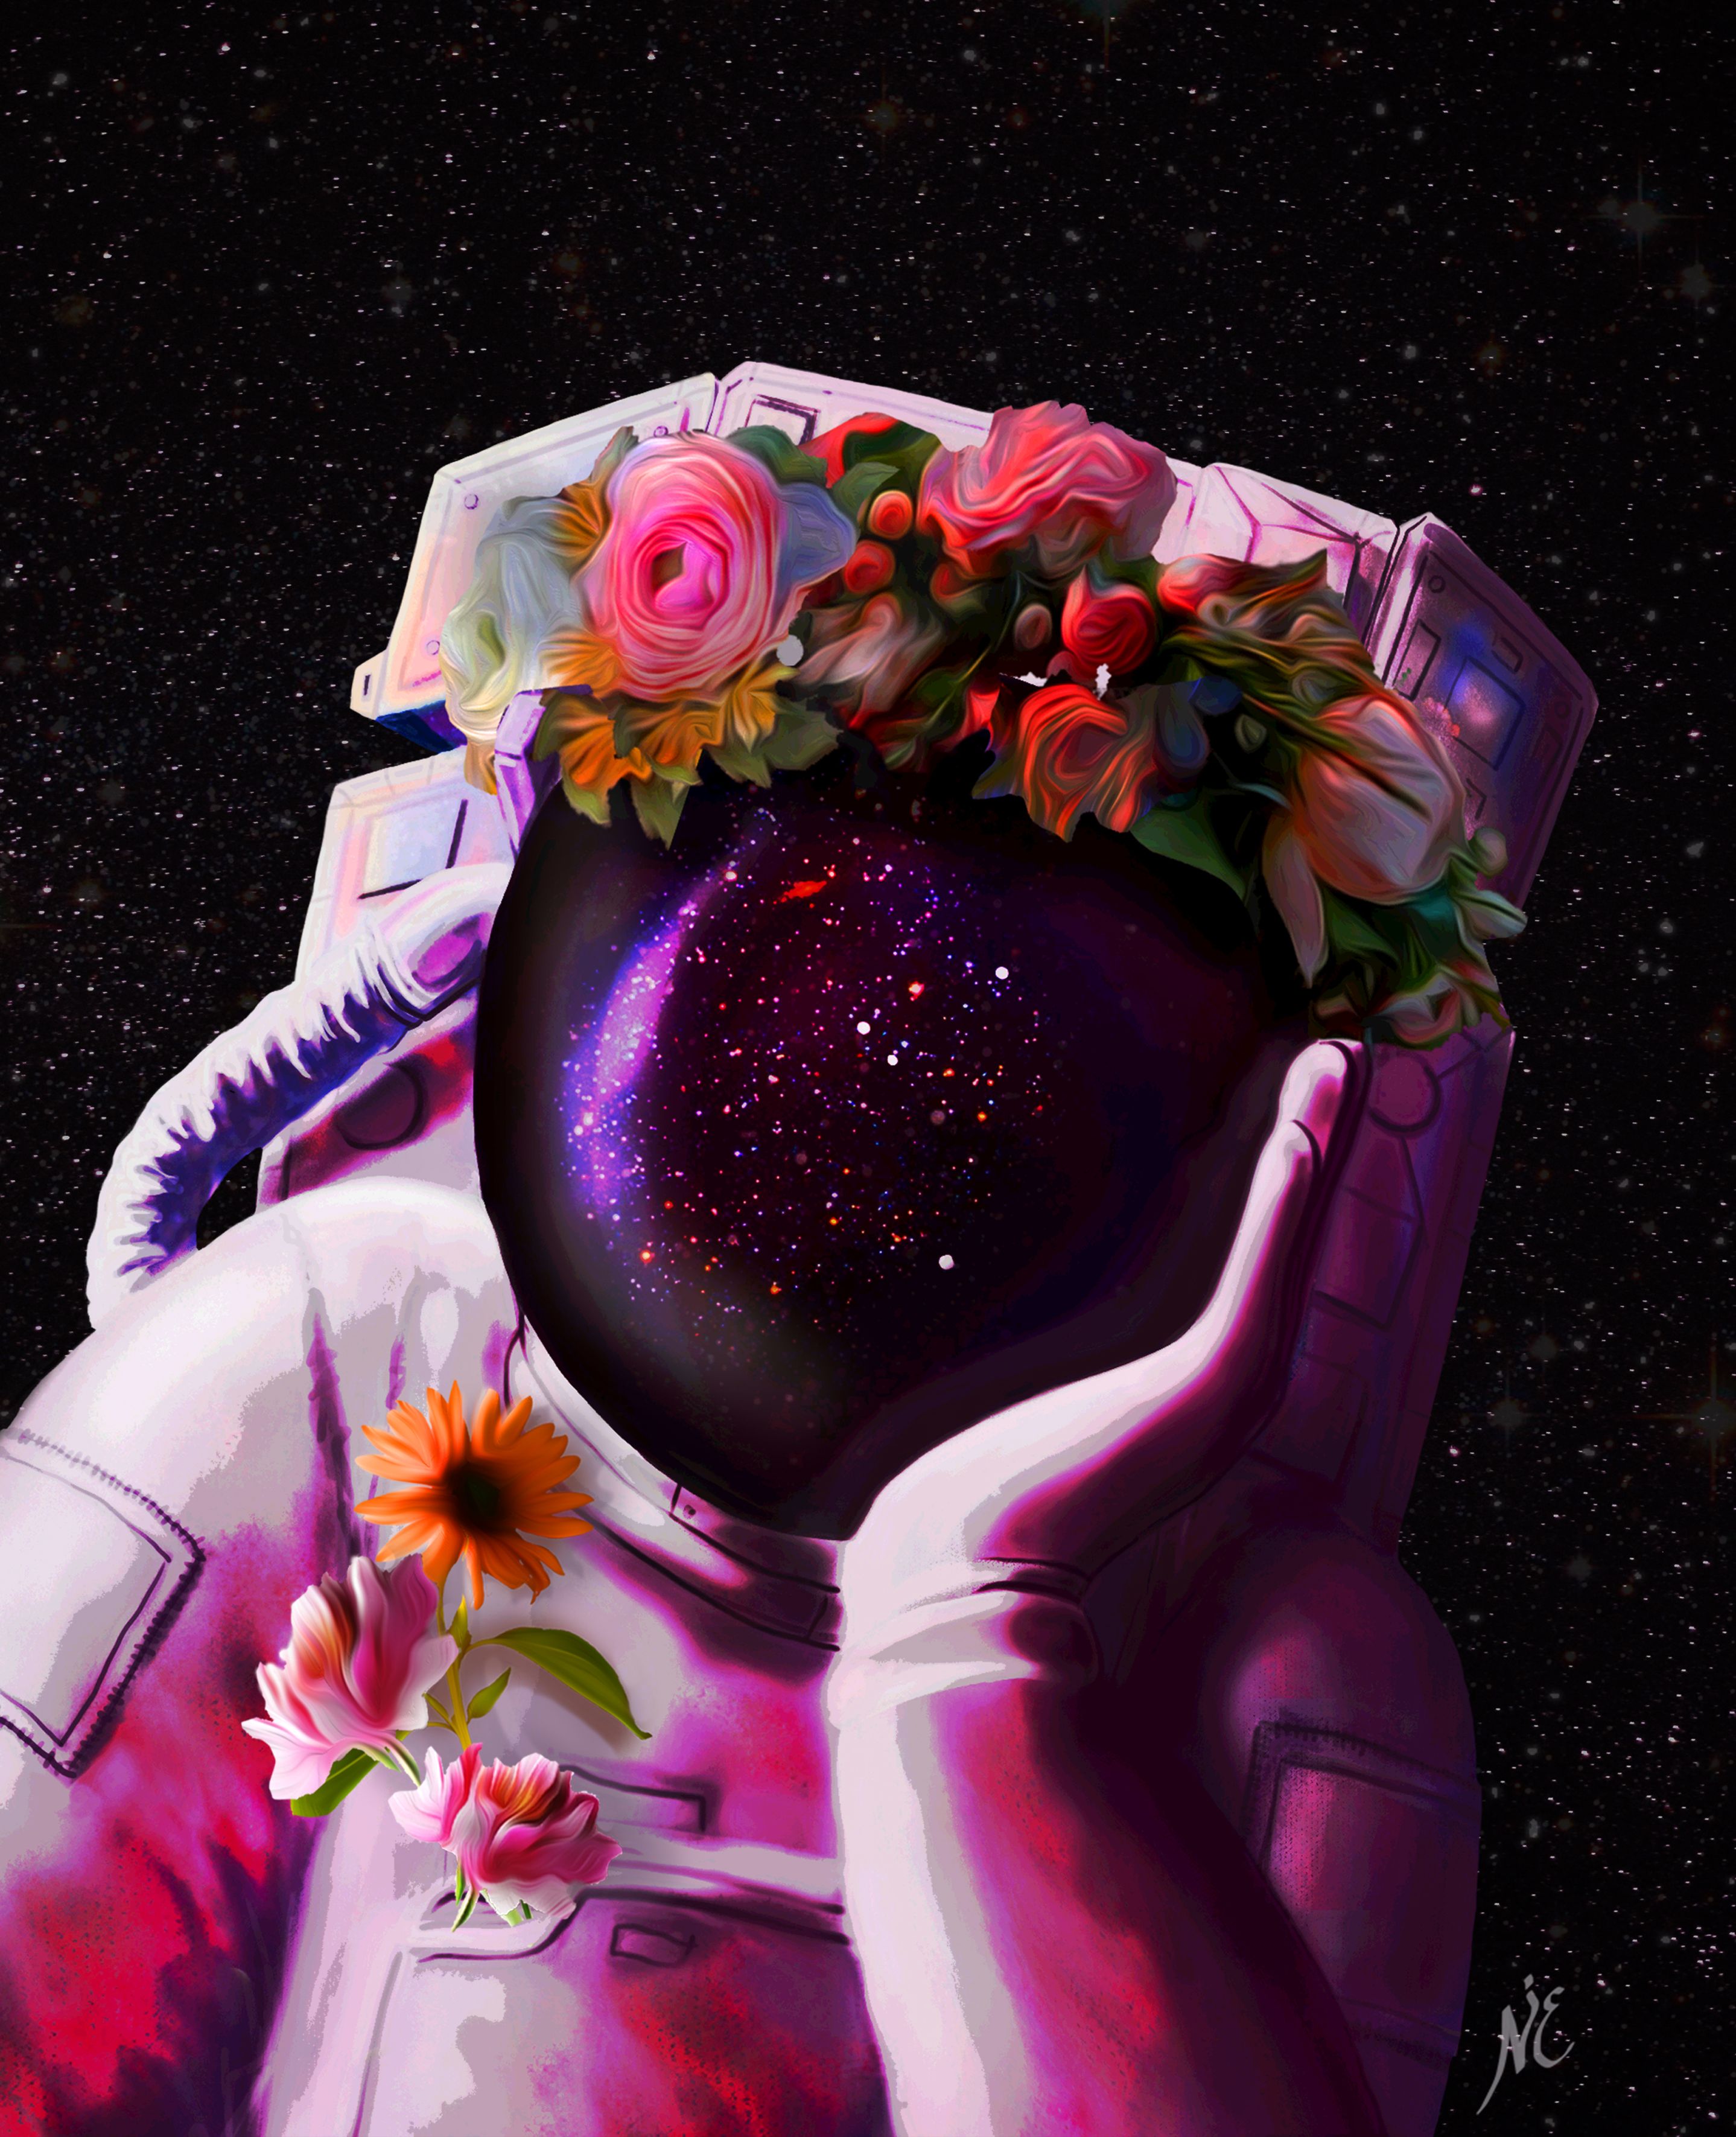 The Pink Astronaut By Noha E. Instagram.com Art.by.noha. Astronaut Art, Space Artwork, Astronaut Wallpaper